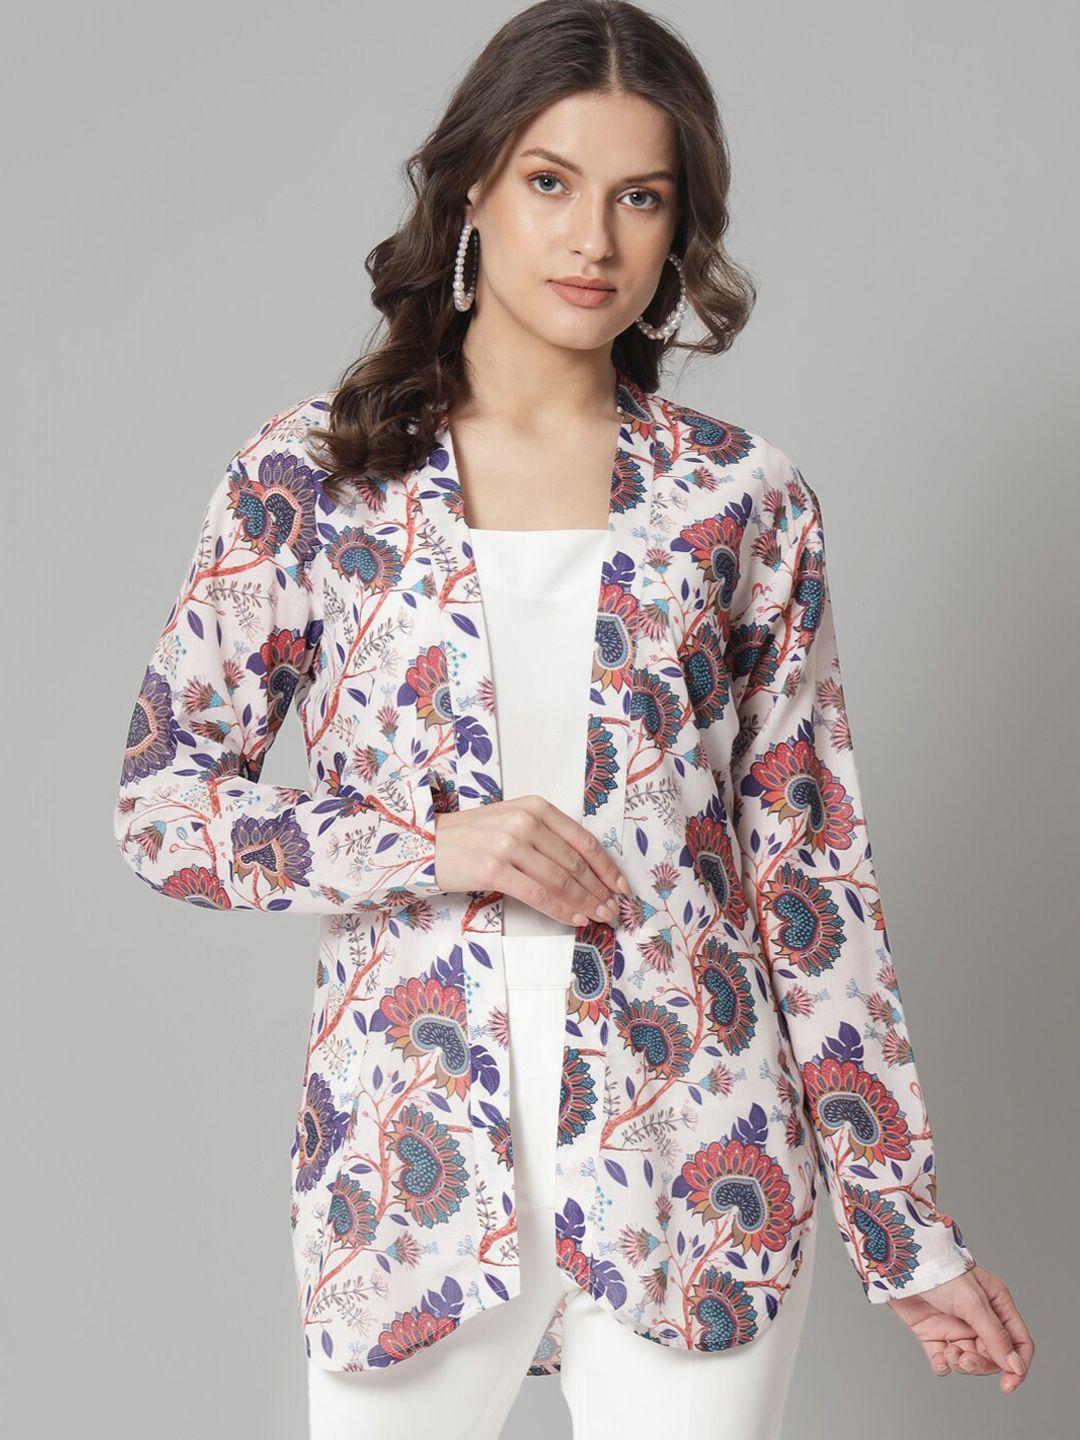 powersutra floral lightweight cotton open front jacket